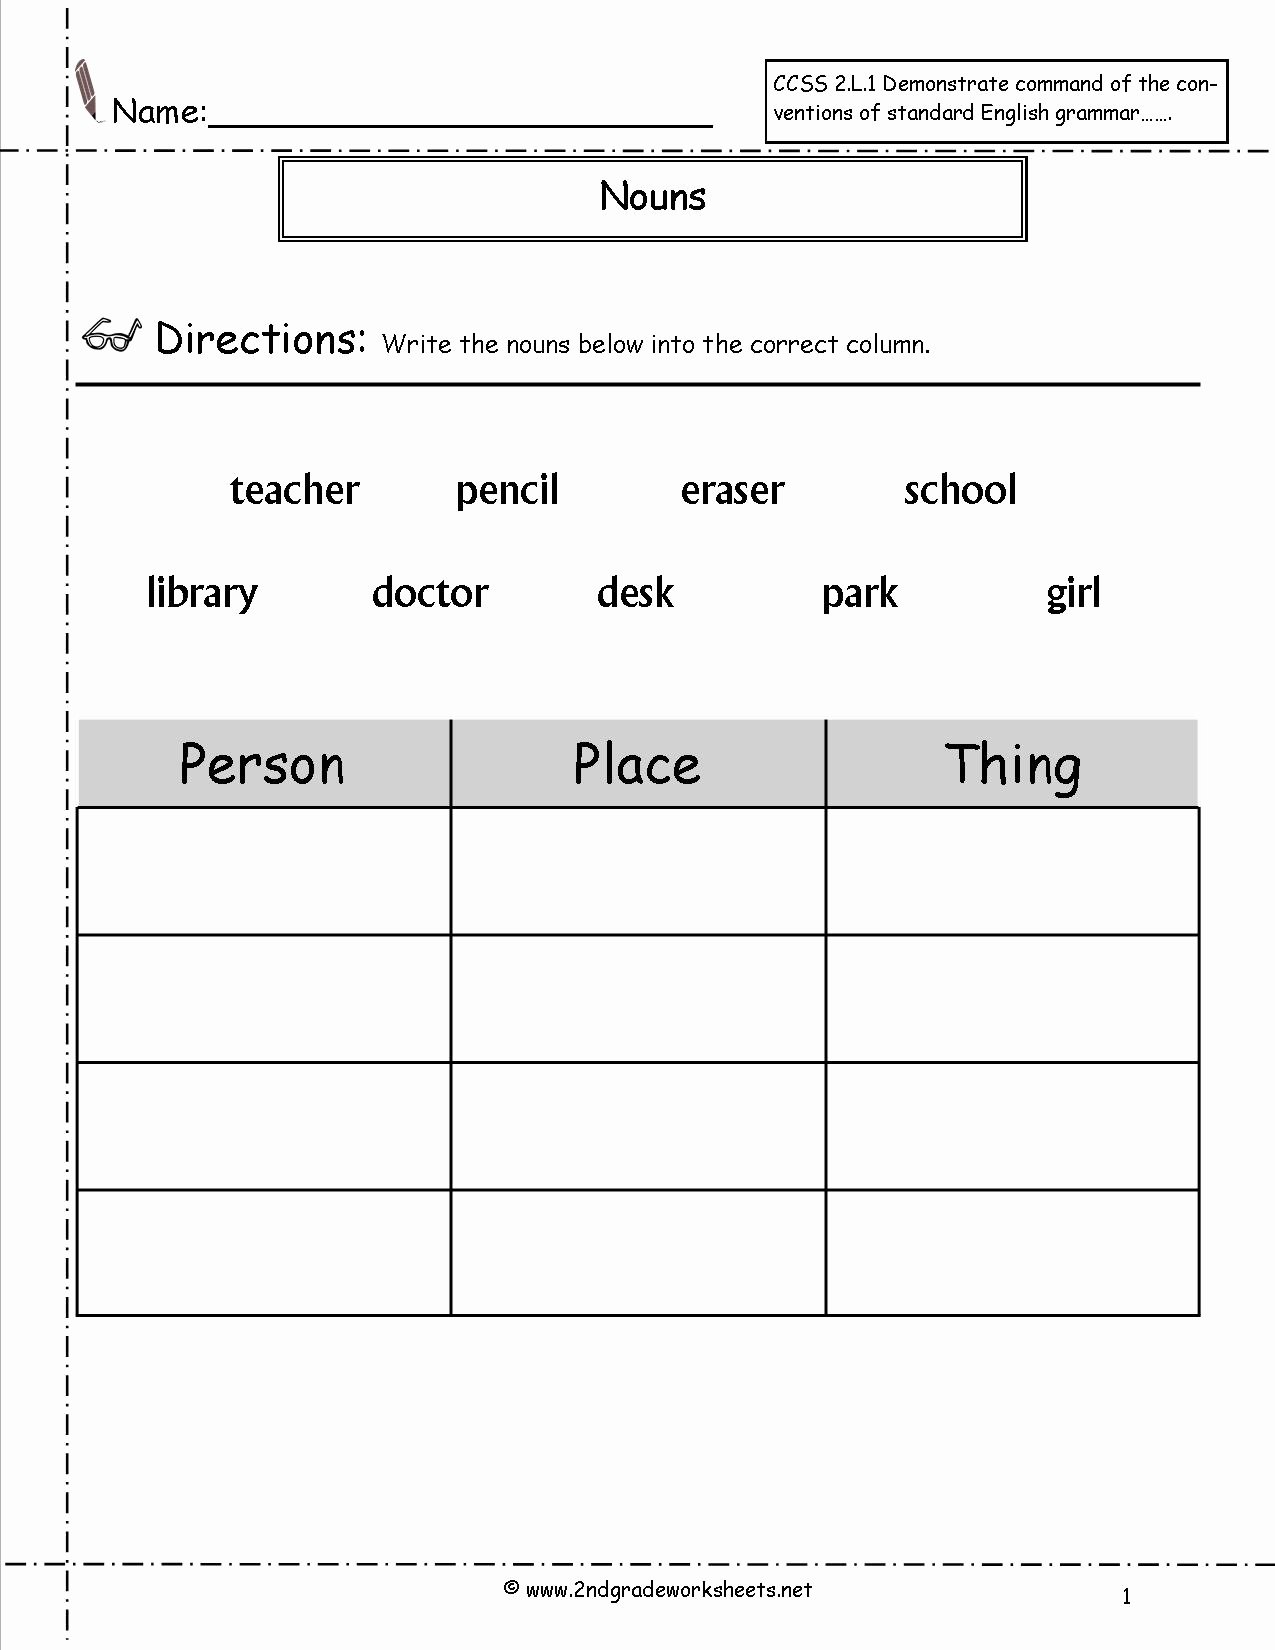 English Worksheet for Grade 2 Lovely Free Language Grammar Worksheets and Printouts